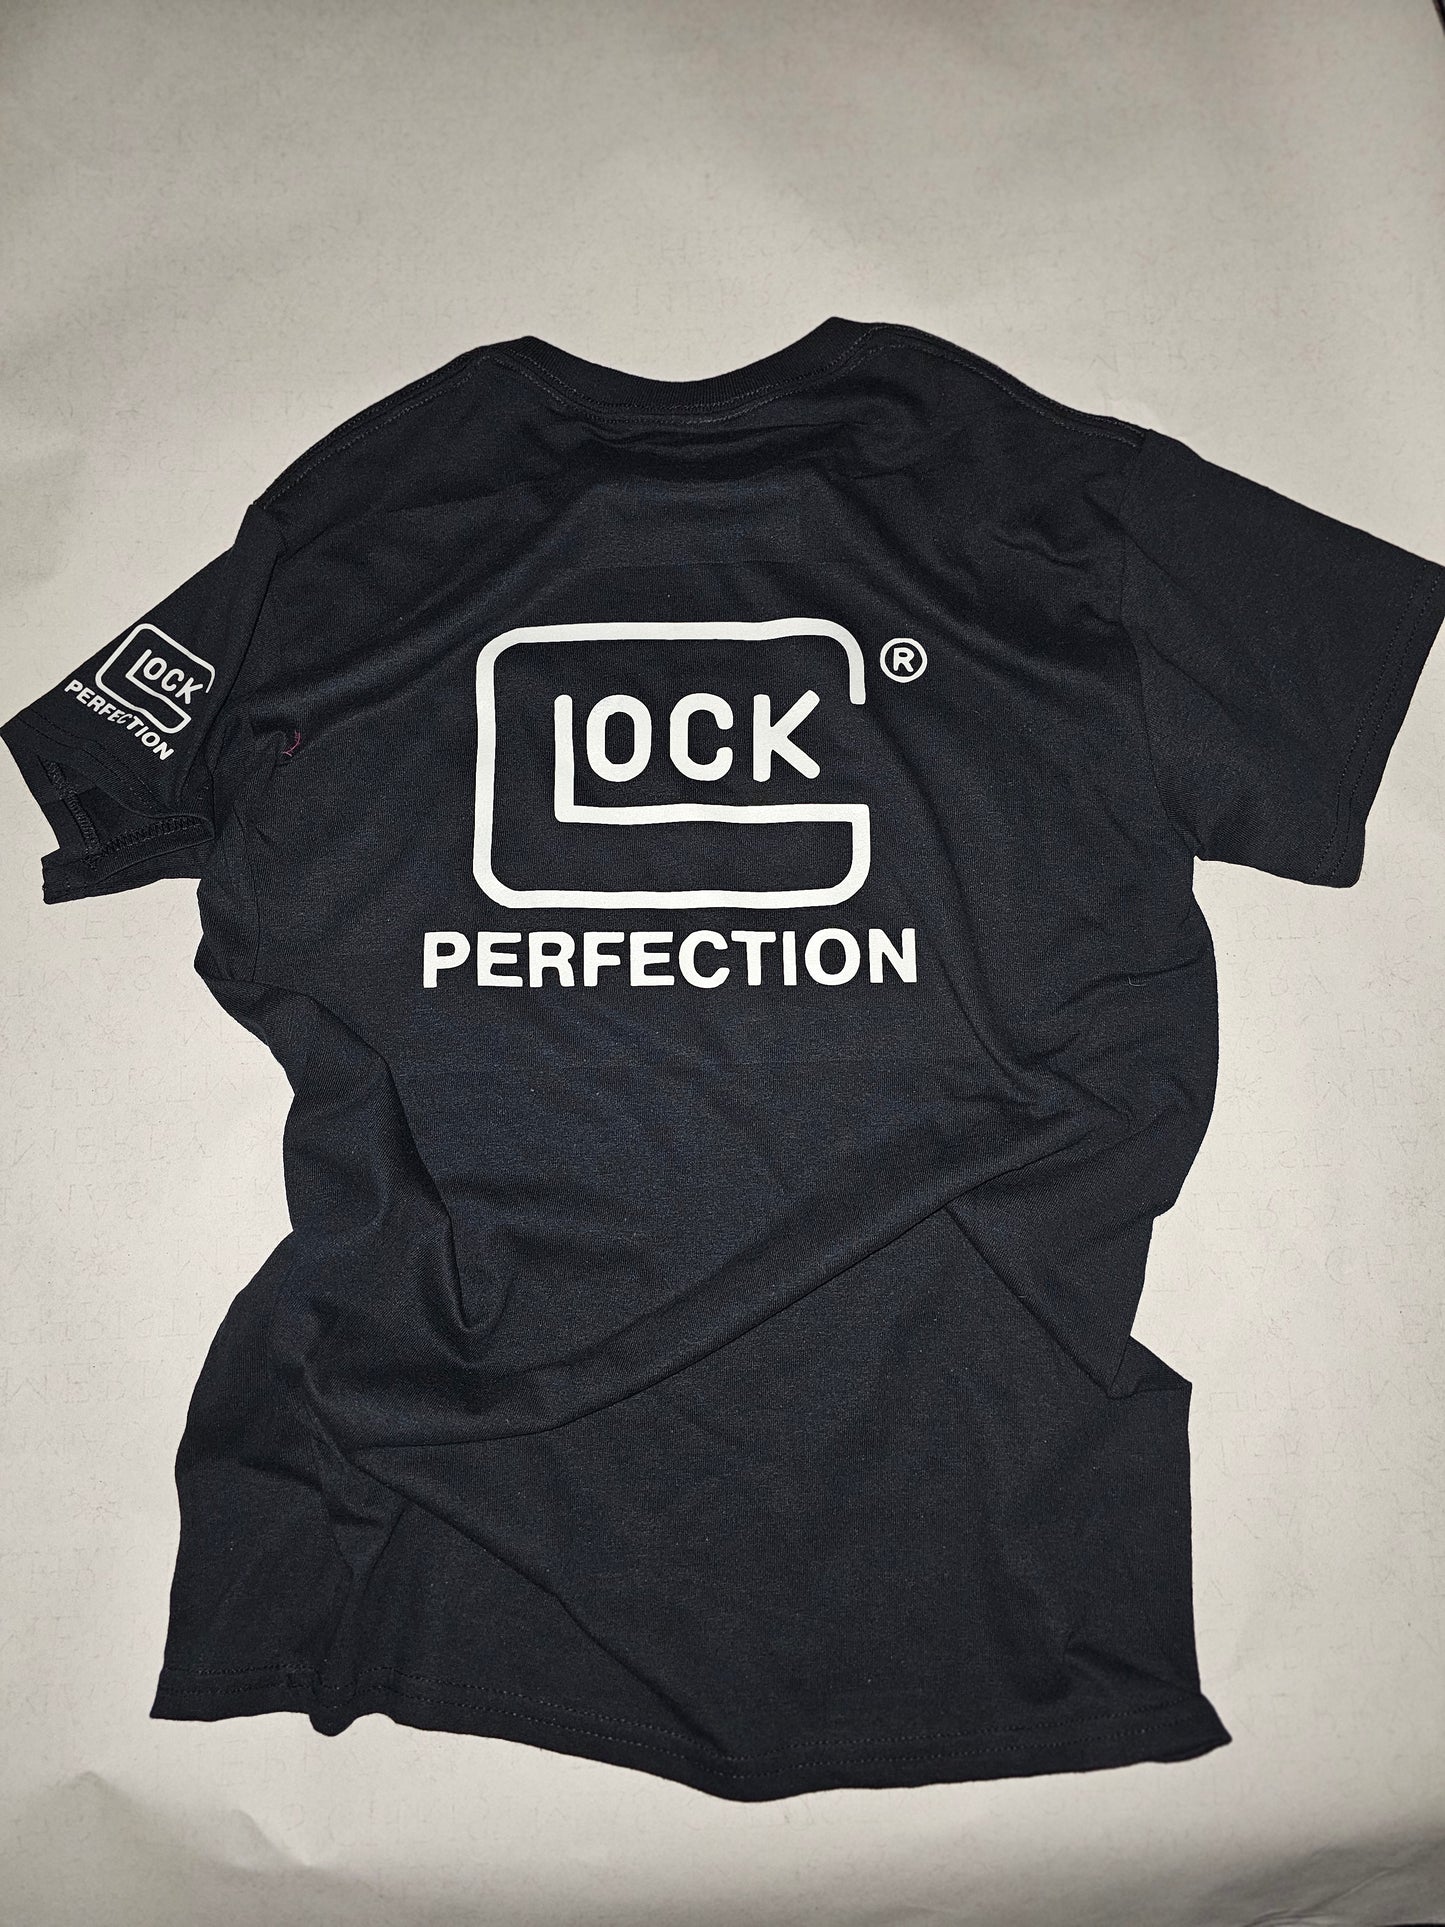 In Glock We Trust  T-Shirt